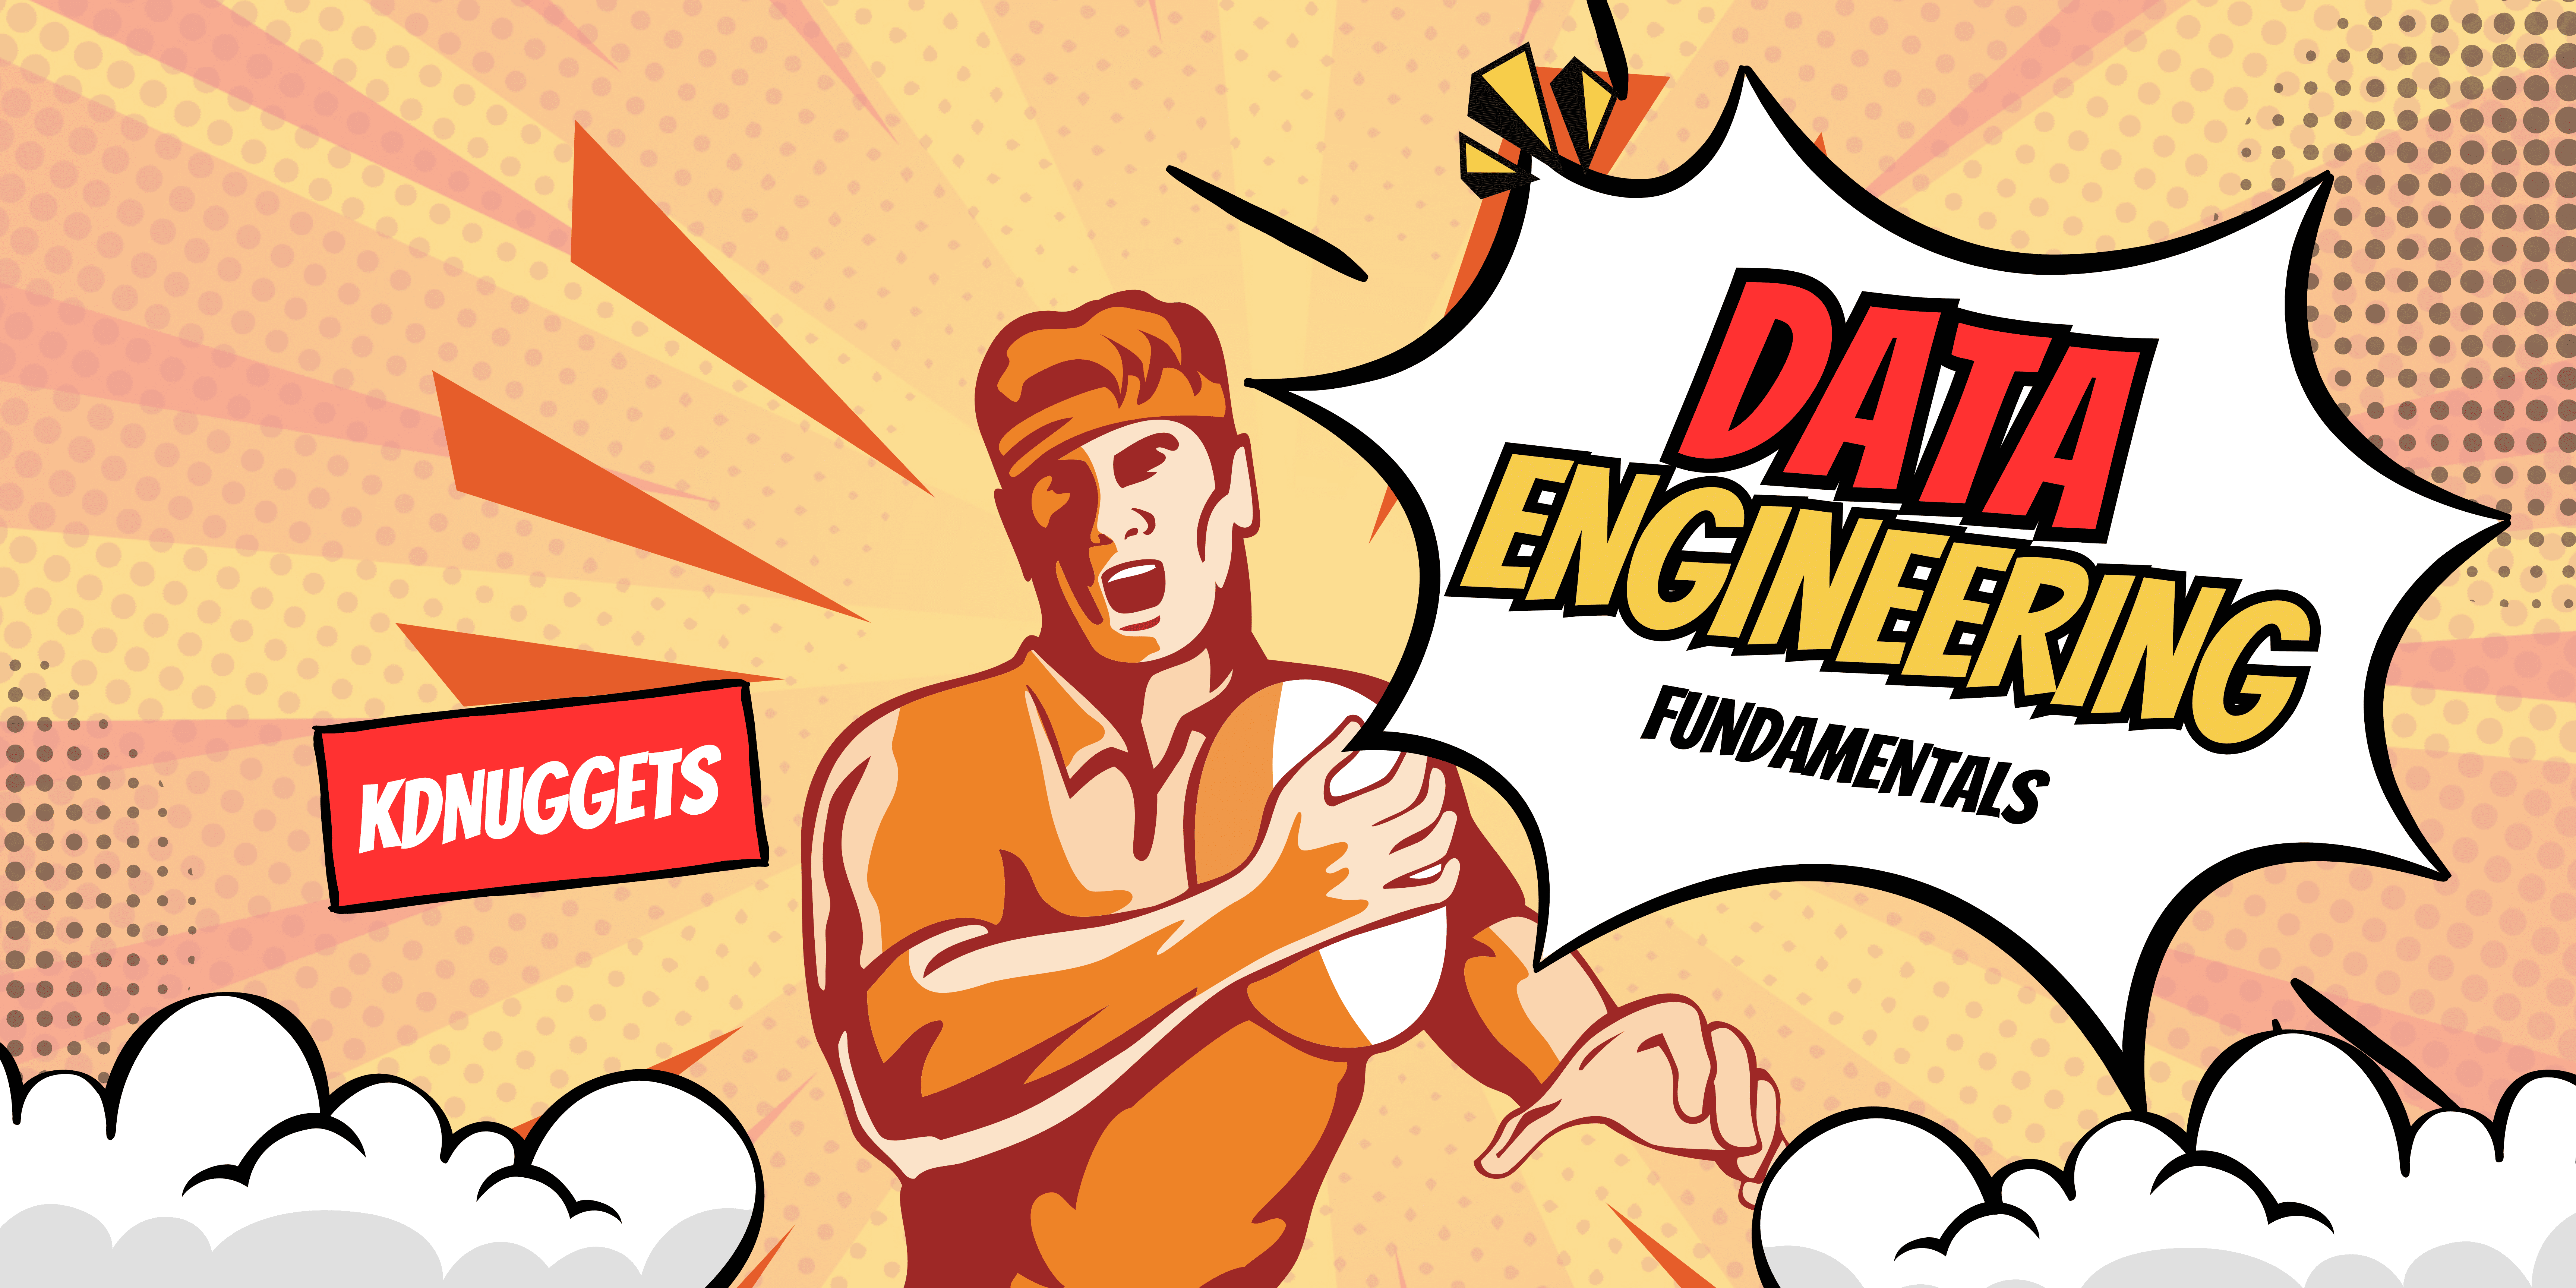 Data engineering